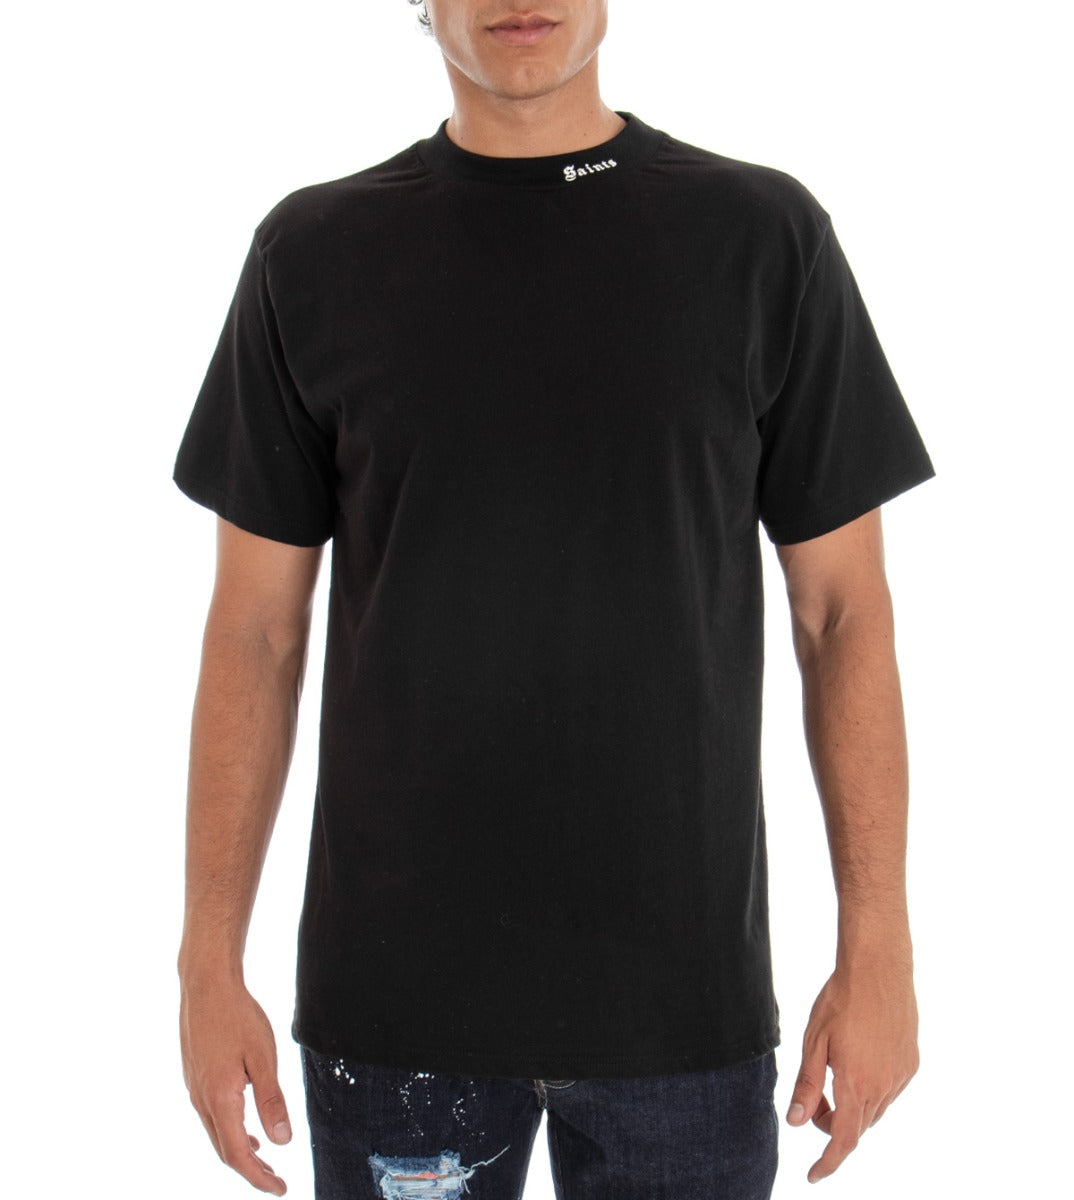 Men's T-shirt Solid Black Print Back Crew Neck Cotton GIOSAL